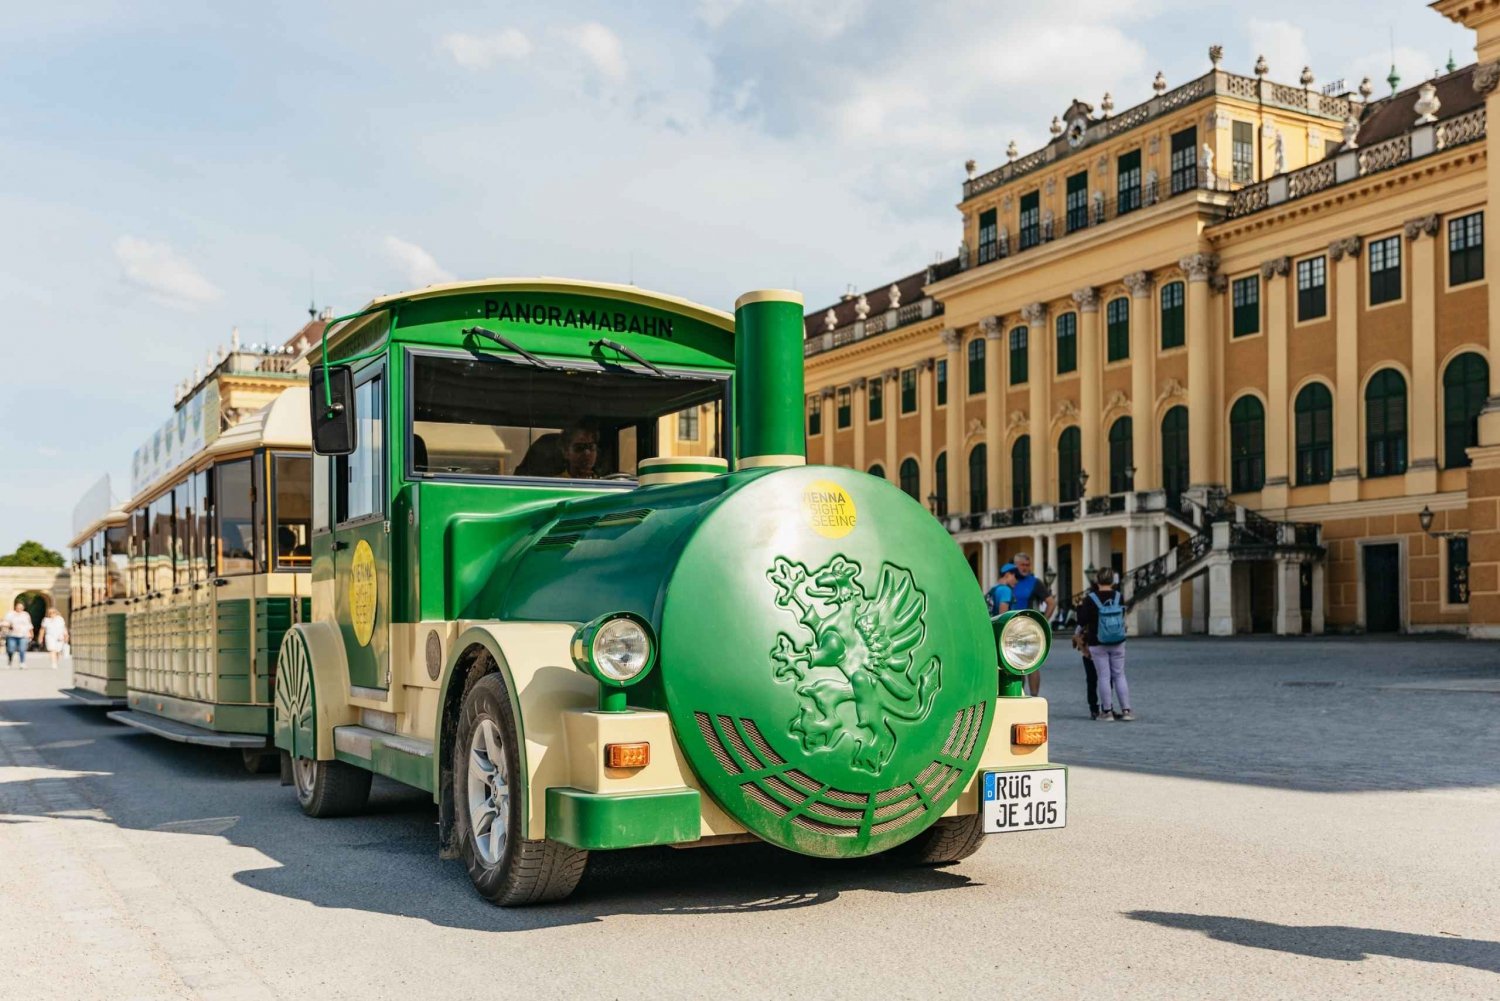 Vienna: Panorama Train Tickets to explore Schönbrunn Palace